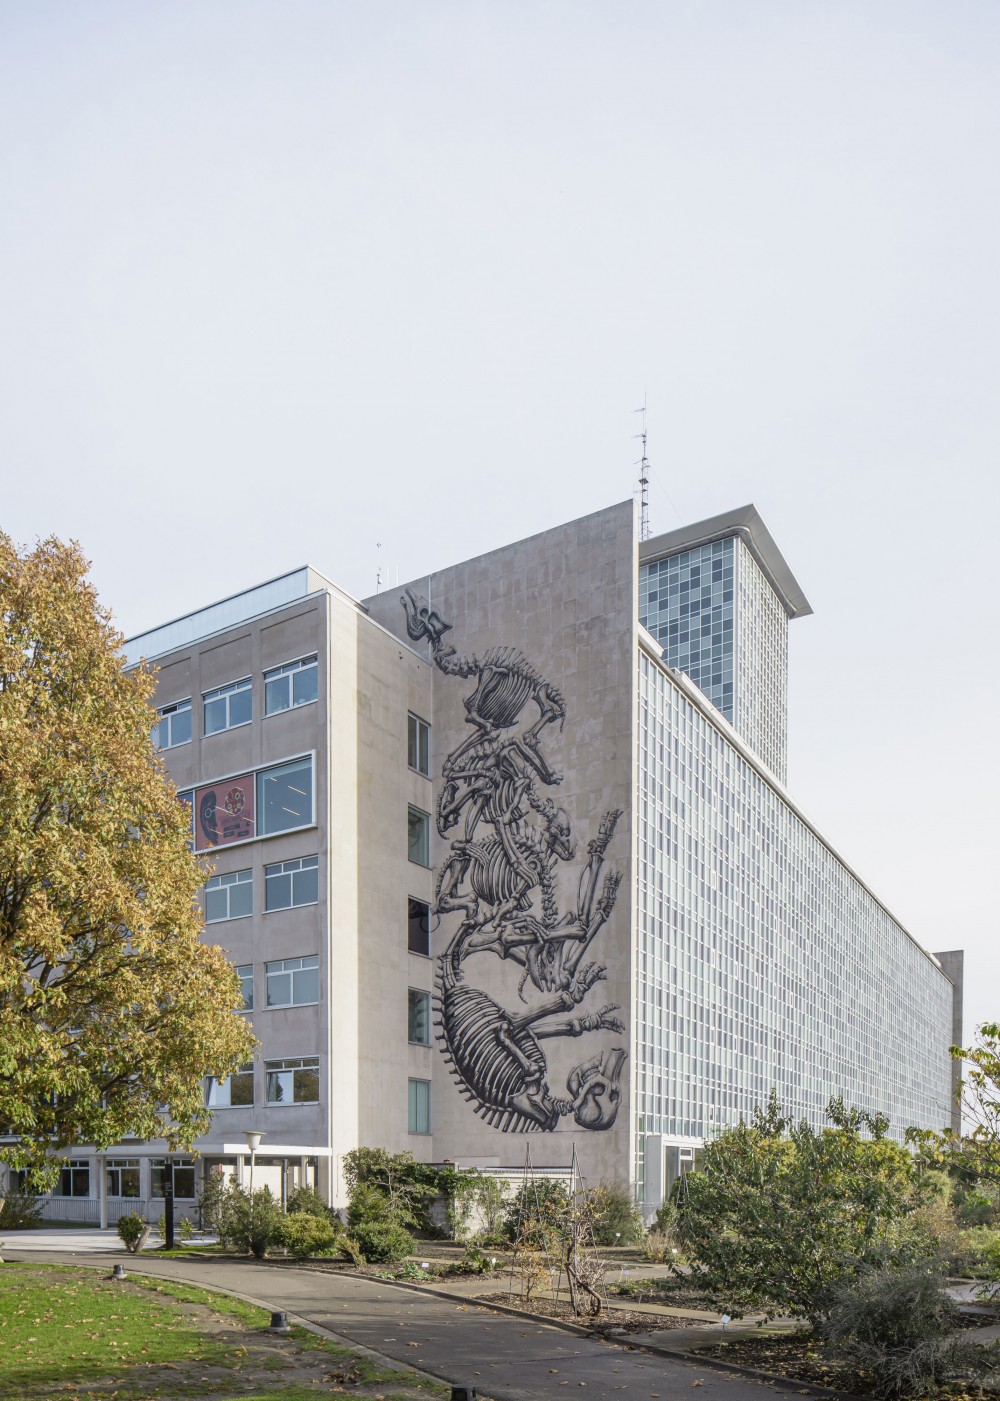 Abscis Architecten - street artist ROA on the wall of the new GUM - photo by Jeroen Verrecht